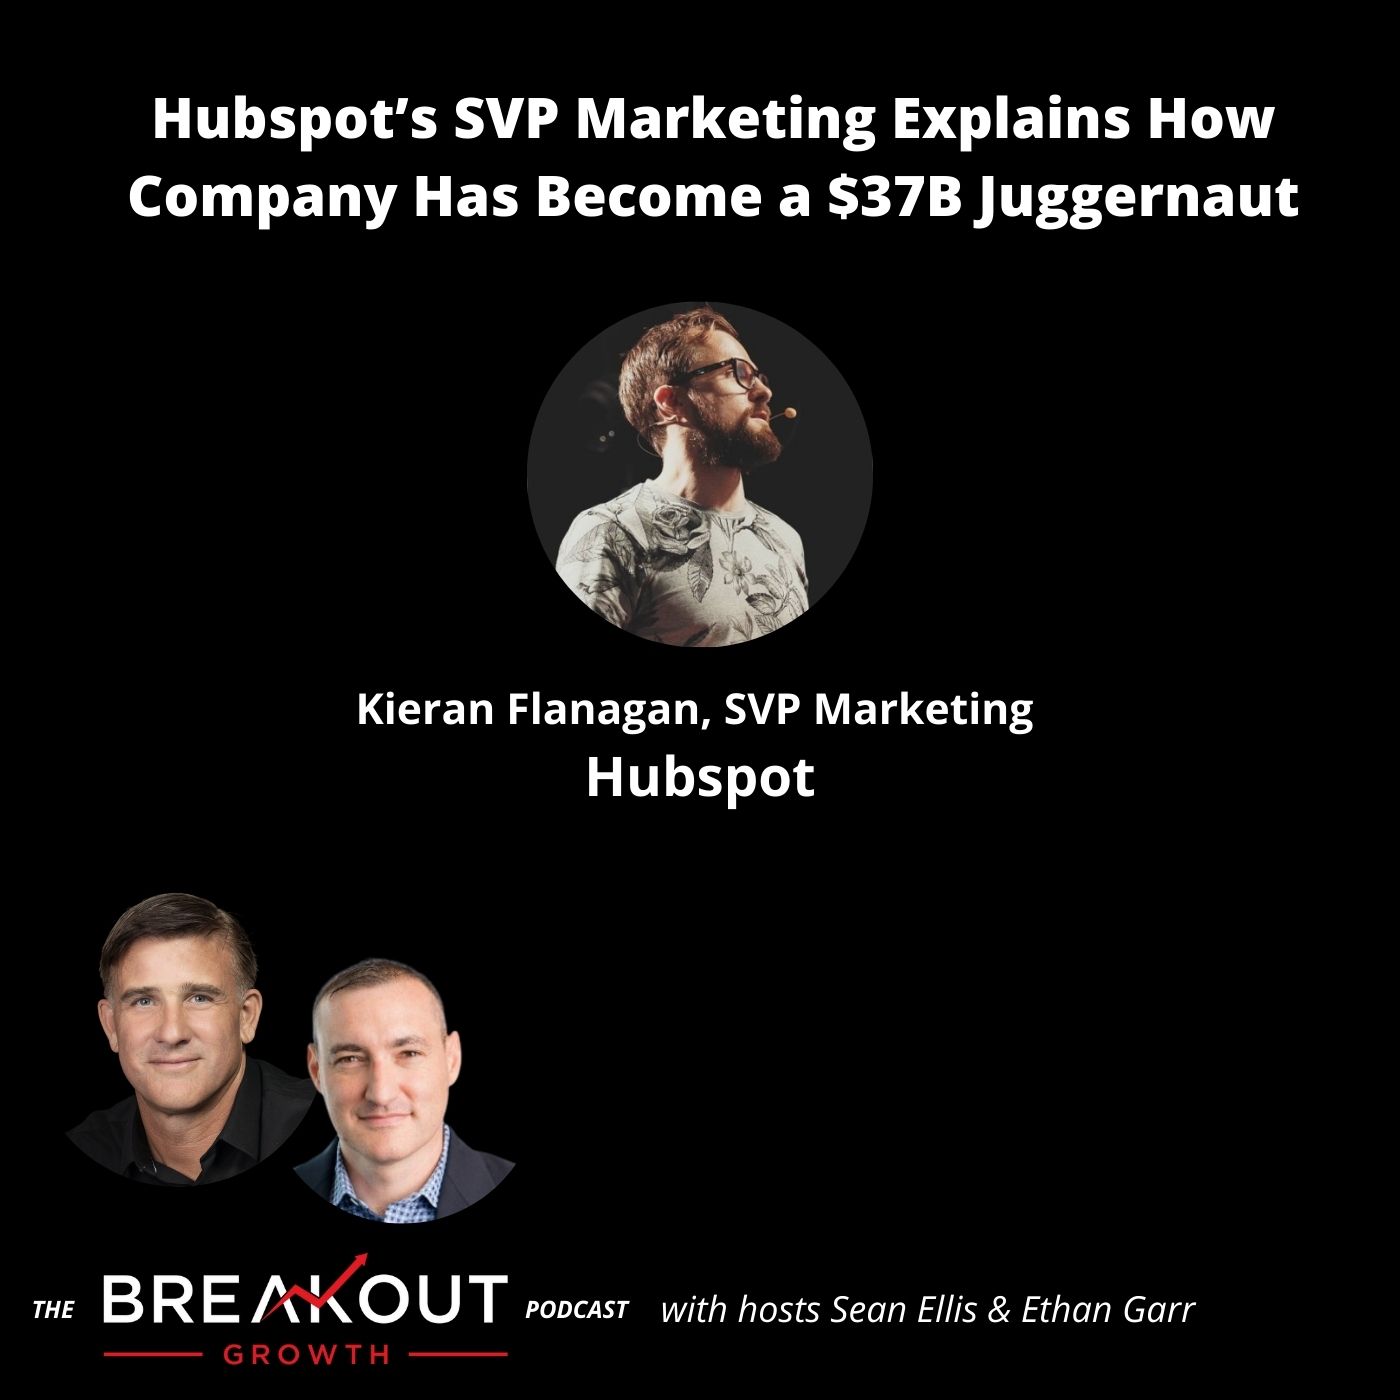 Hubspot’s SVP Marketing Explains How Company Has Become a $37B Juggernaut